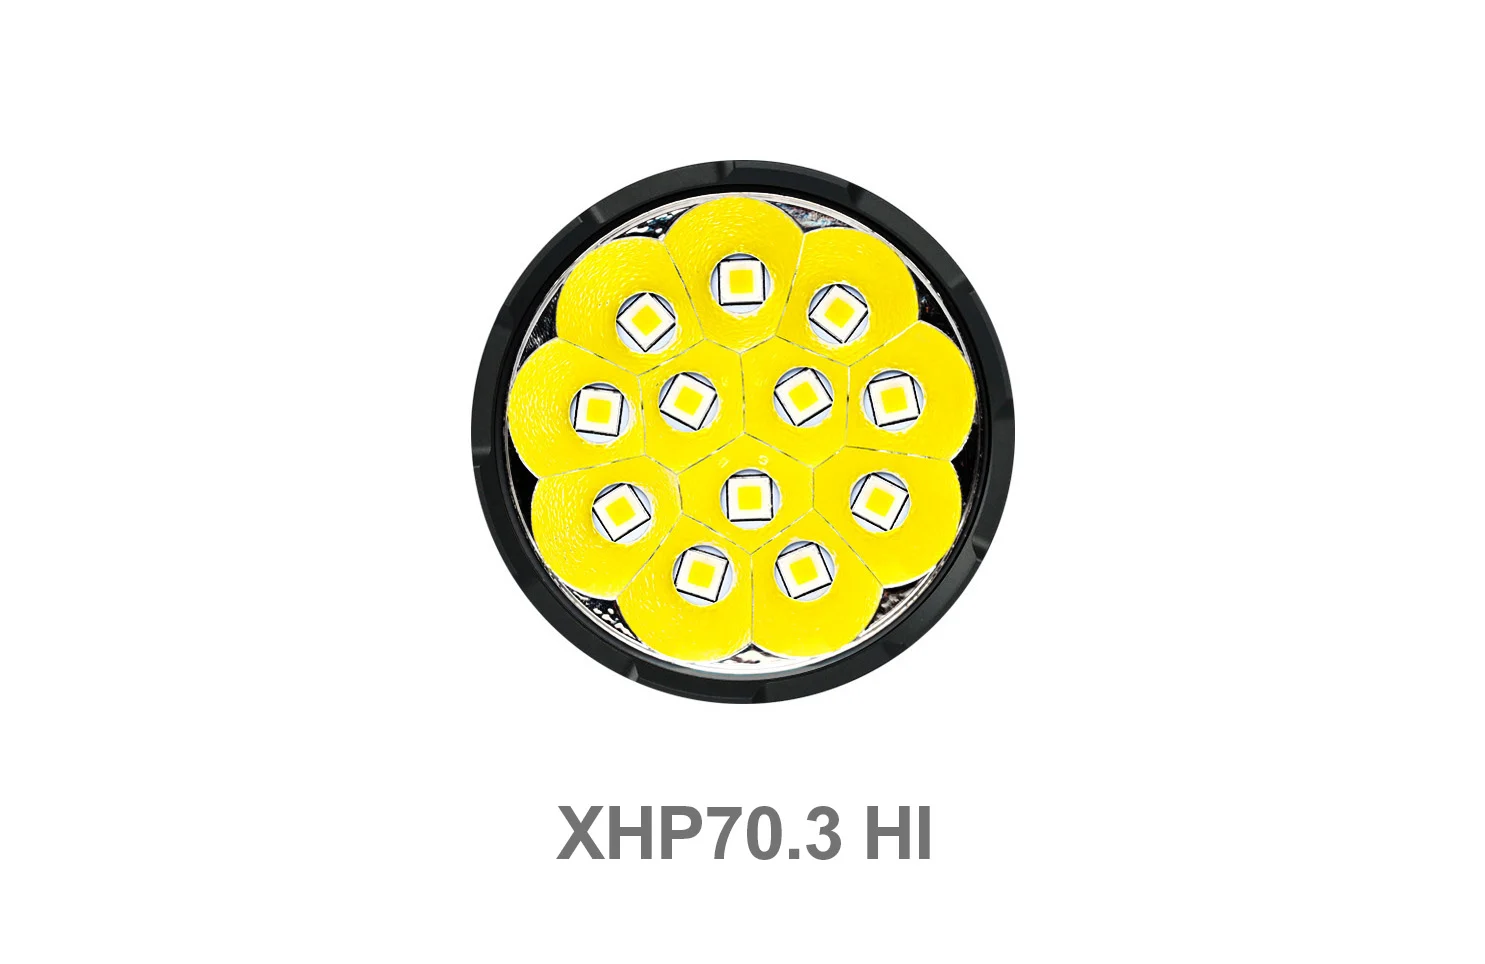 Acebeam X75 12 X  XHP70.3 HI LED's 67,000 Lumens Micro-arc Oxidation Powerful Flashlight